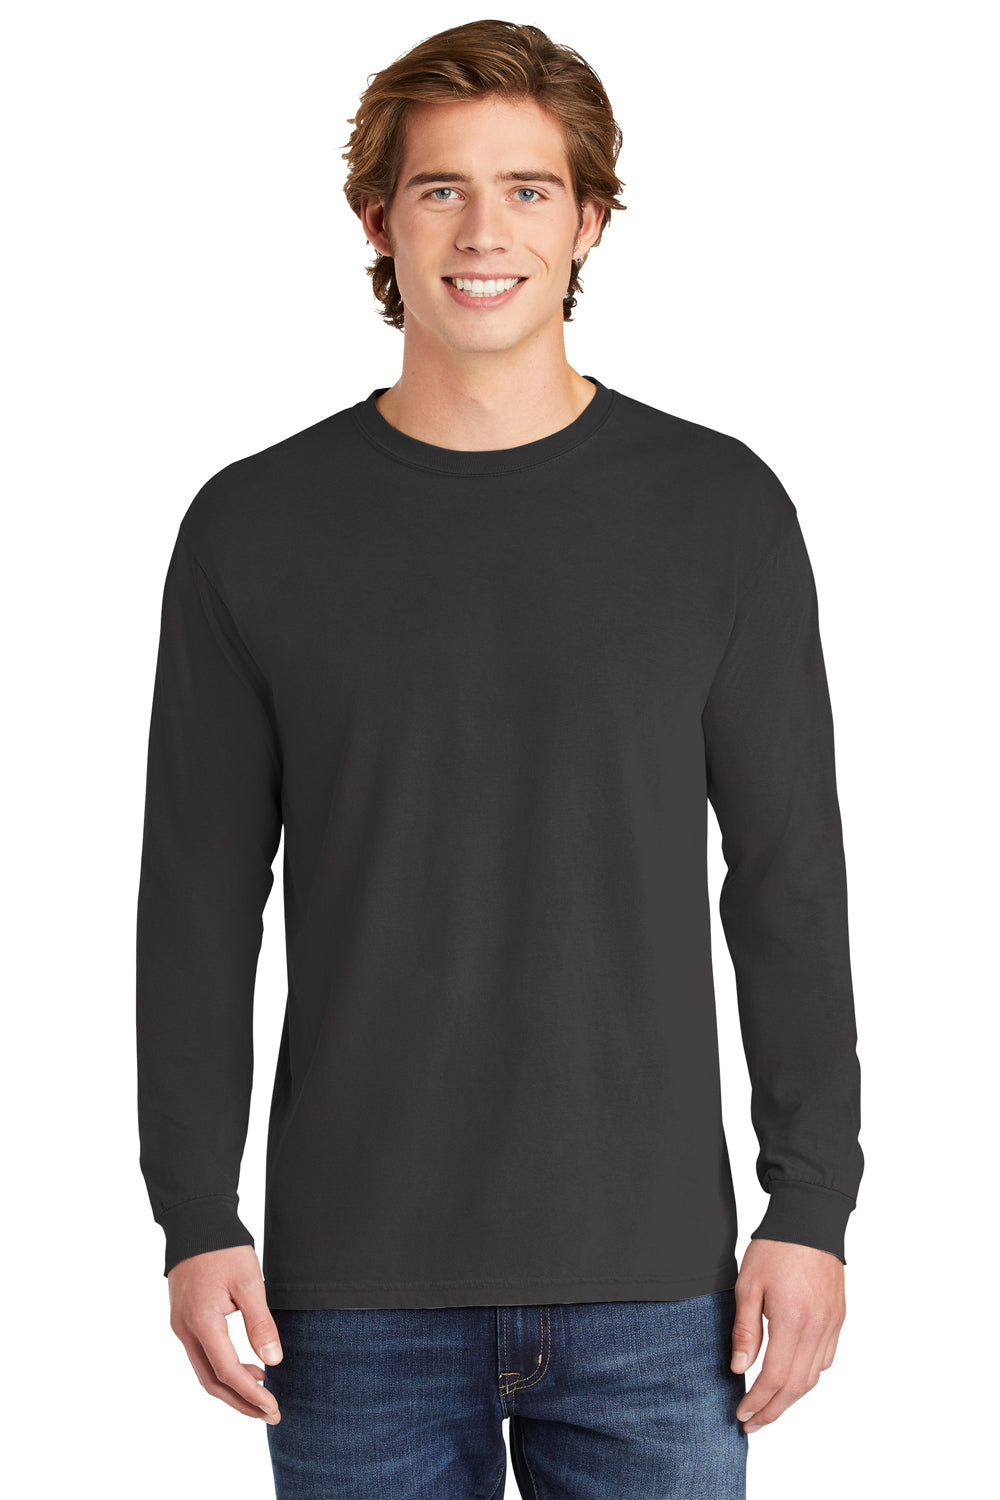 Comfort Colors 6014/C6014 Mens Long Sleeve Crewneck T-Shirt Graphite Grey Front